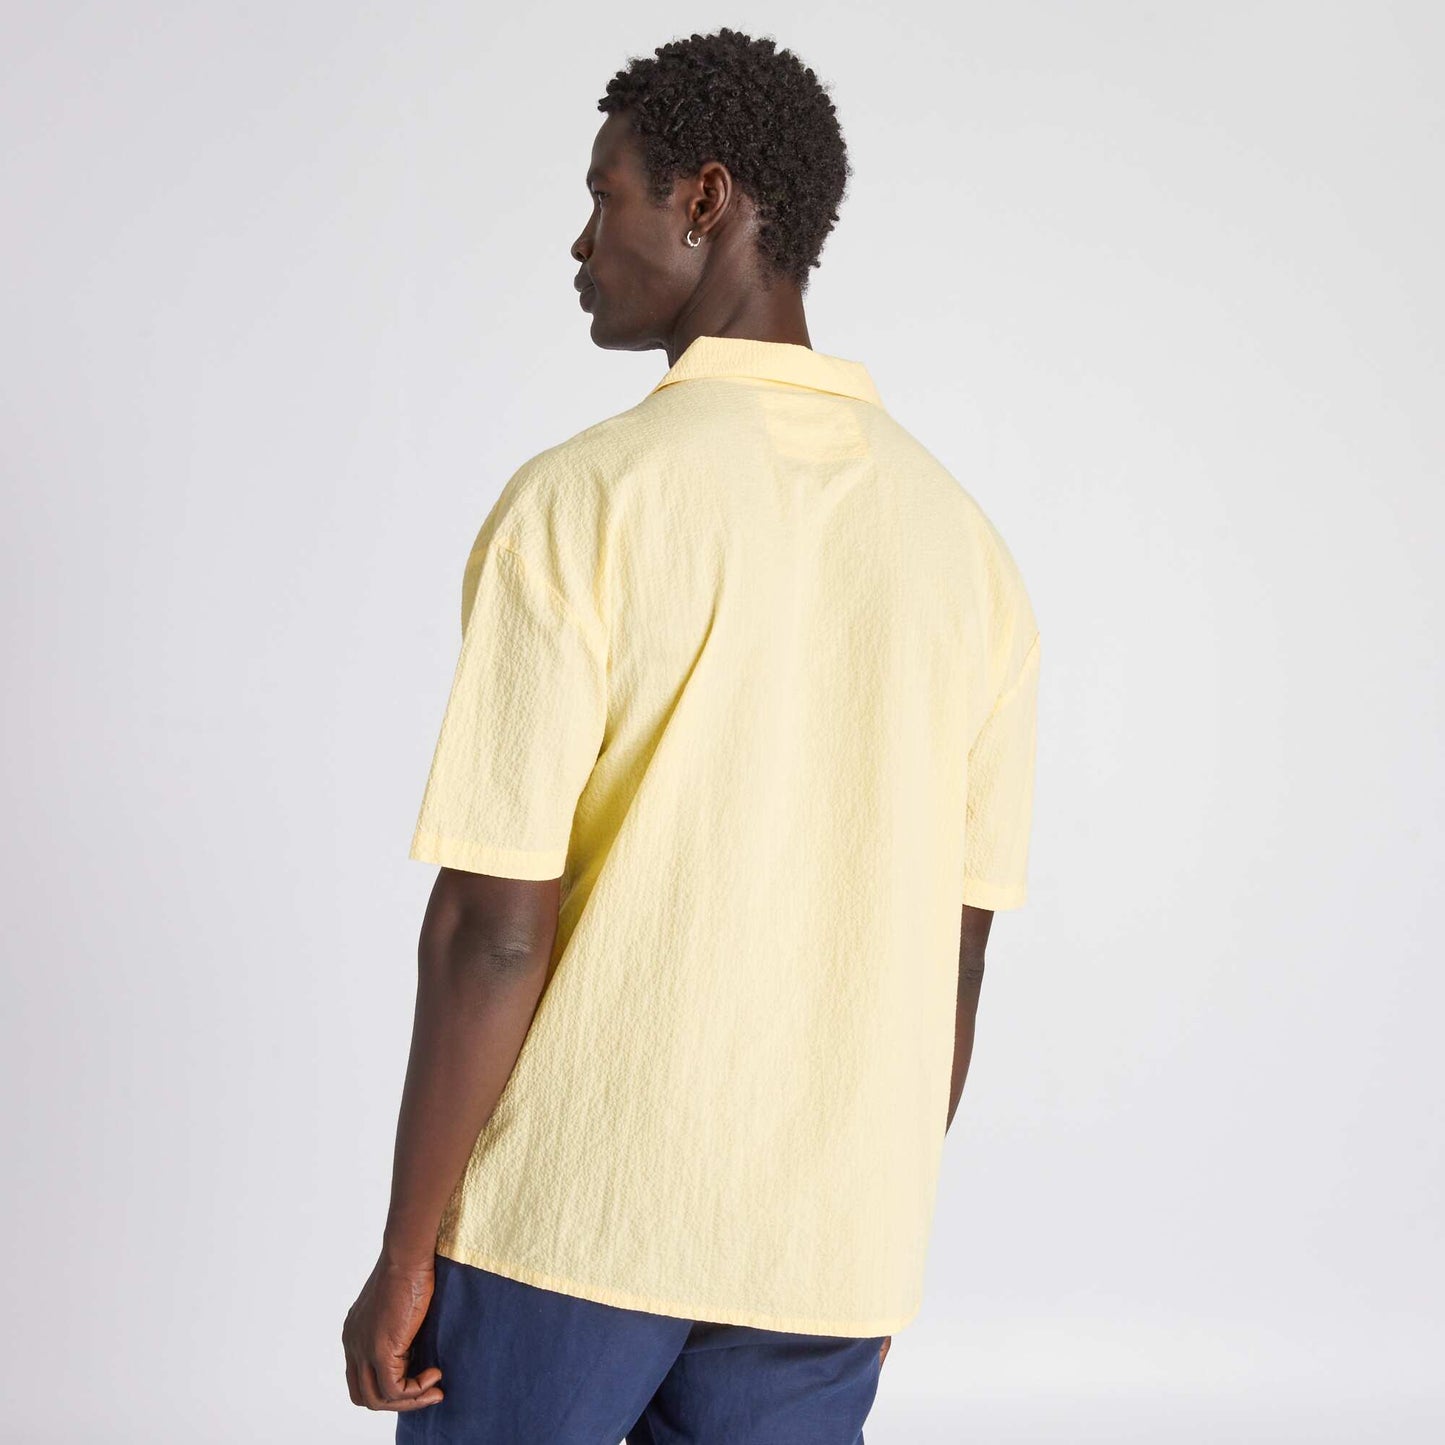 Honeycomb fabric shirt gold yellow